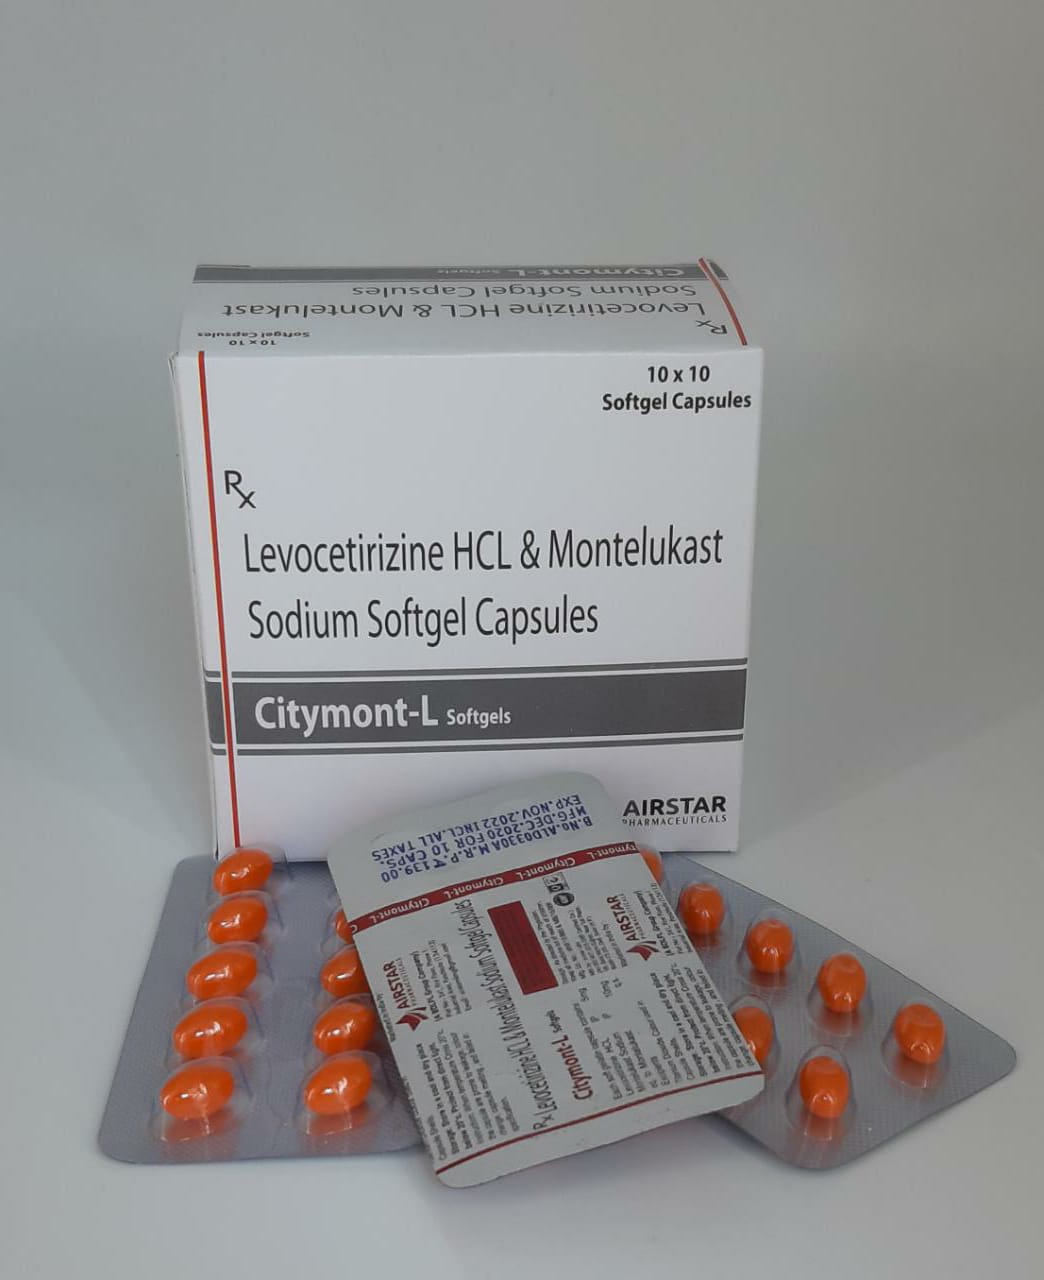 Product Name: Citymont L, Compositions of Levocetrizine HCL & Montelukast Sodium Softgel Capsules are Levocetrizine HCL & Montelukast Sodium Softgel Capsules - Biodiscovery Lifesciences Pvt Ltd